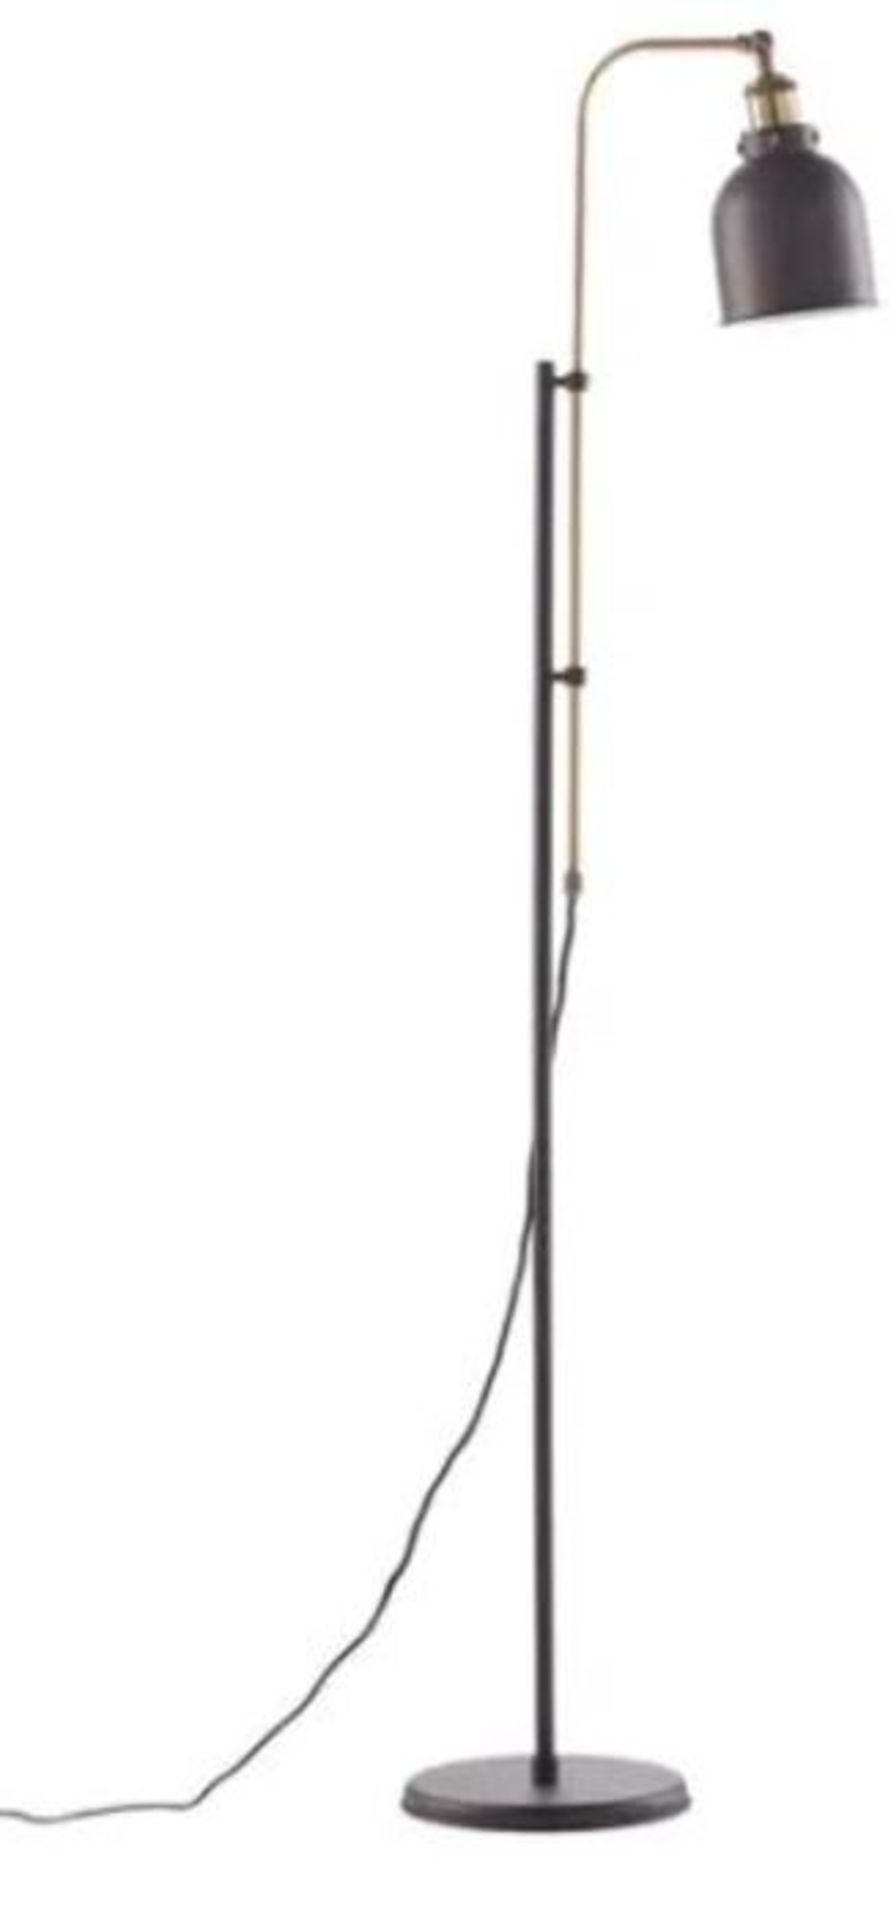 ZANTAR FLOOR LAMP IN METAL AND BRONZE / RRP £165.00 / CUSTOMER RETURN, GRADE A UNTESTED